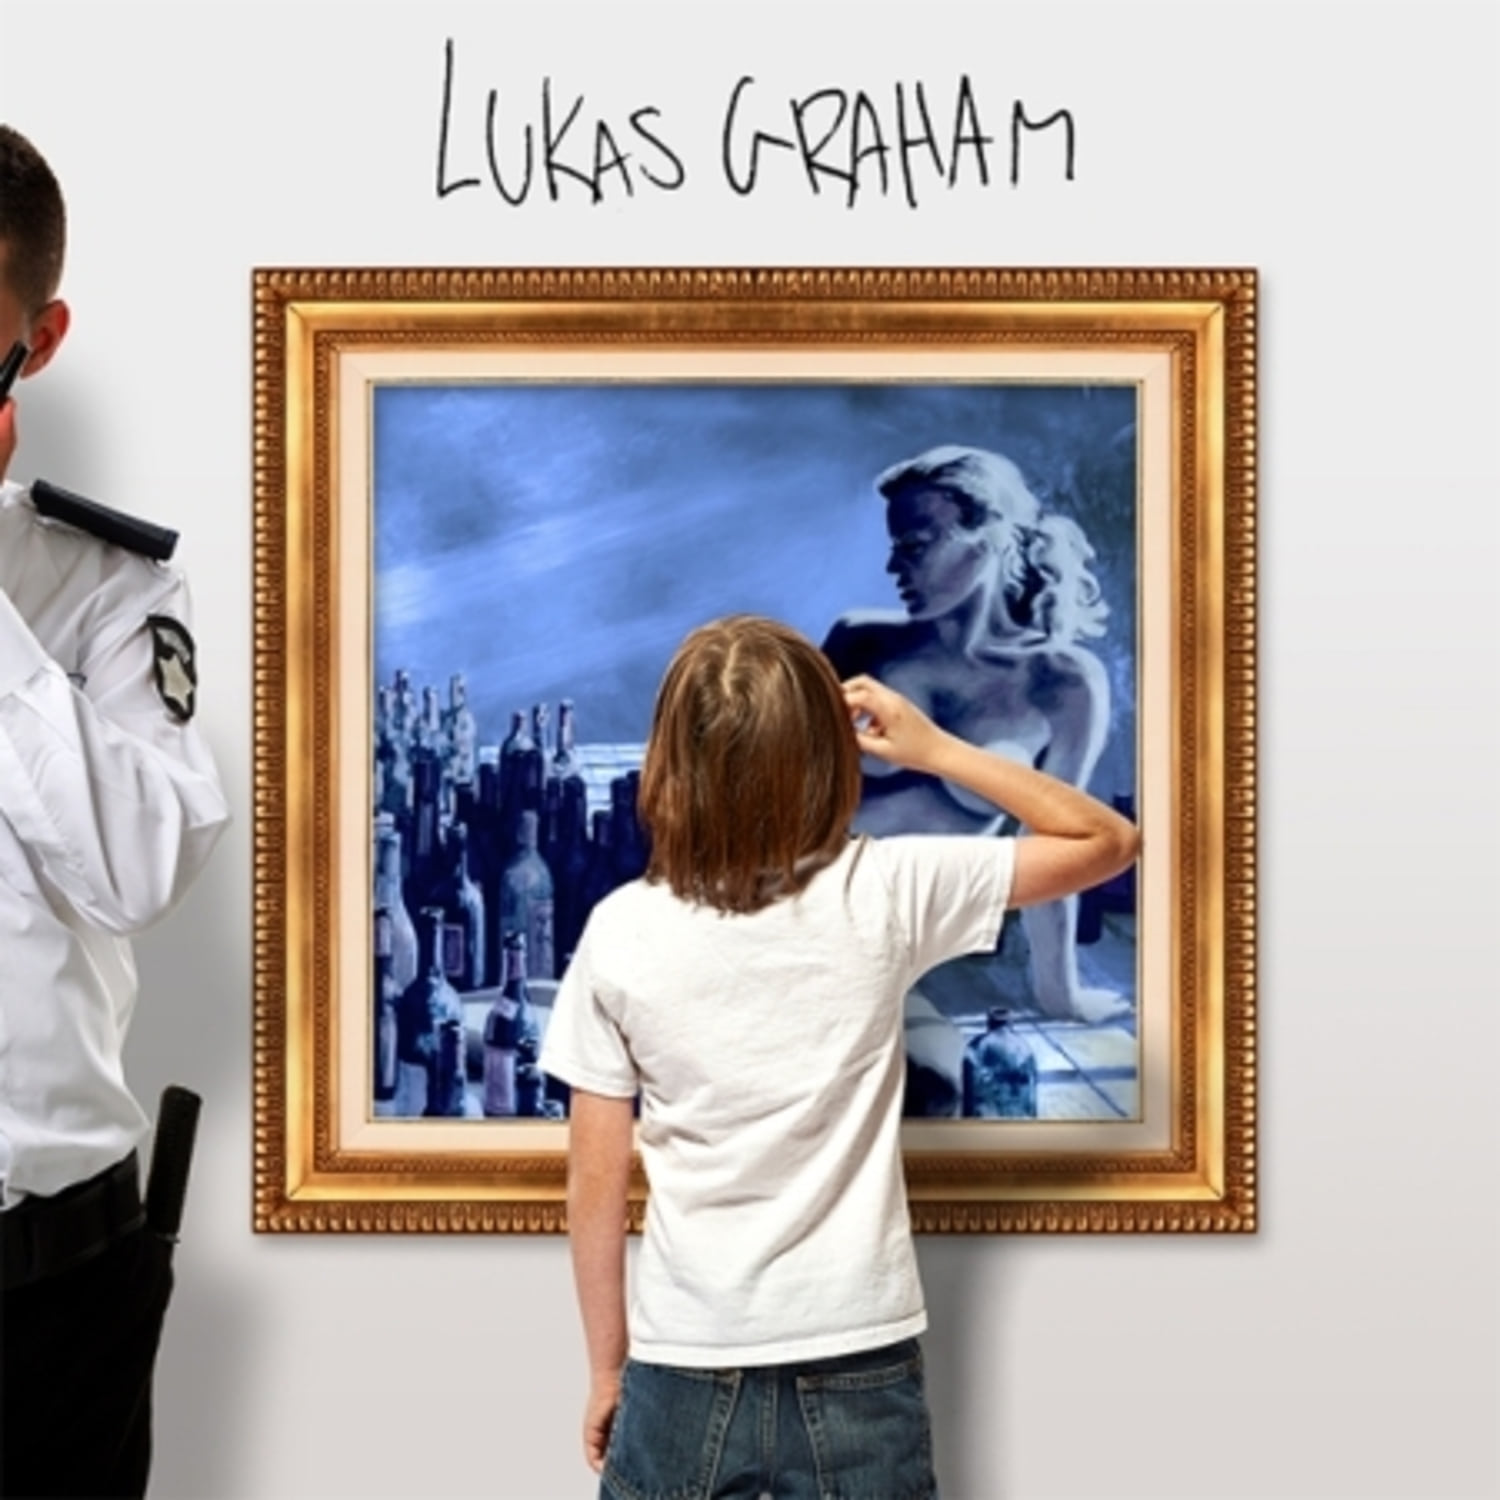 Lukas Graham (루카스 그레이엄)  - Lukas Graham